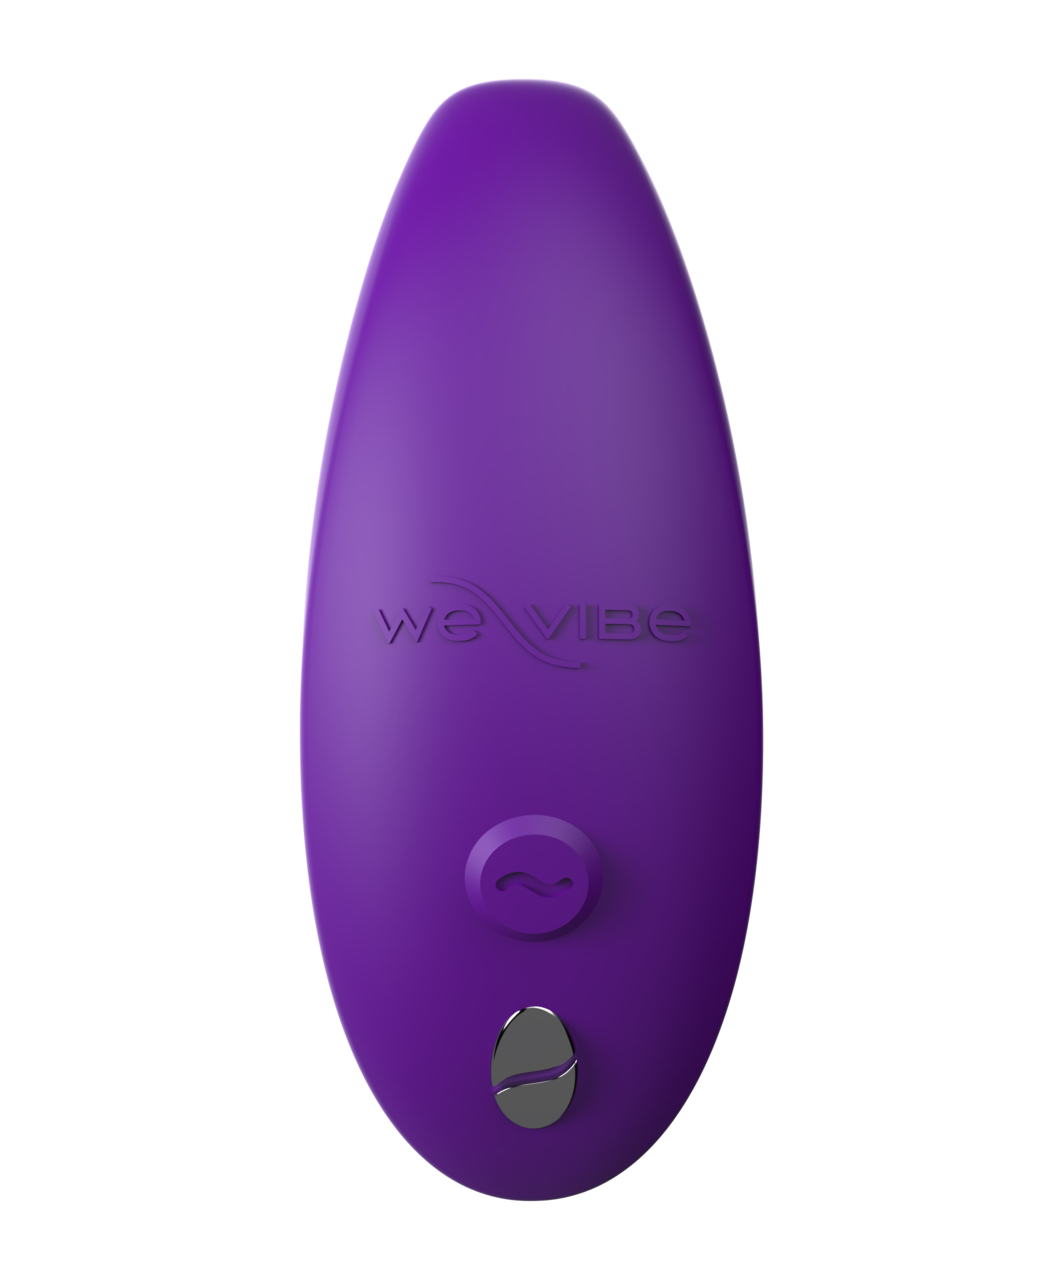 We-Vibe Sync 2 couples vibrator